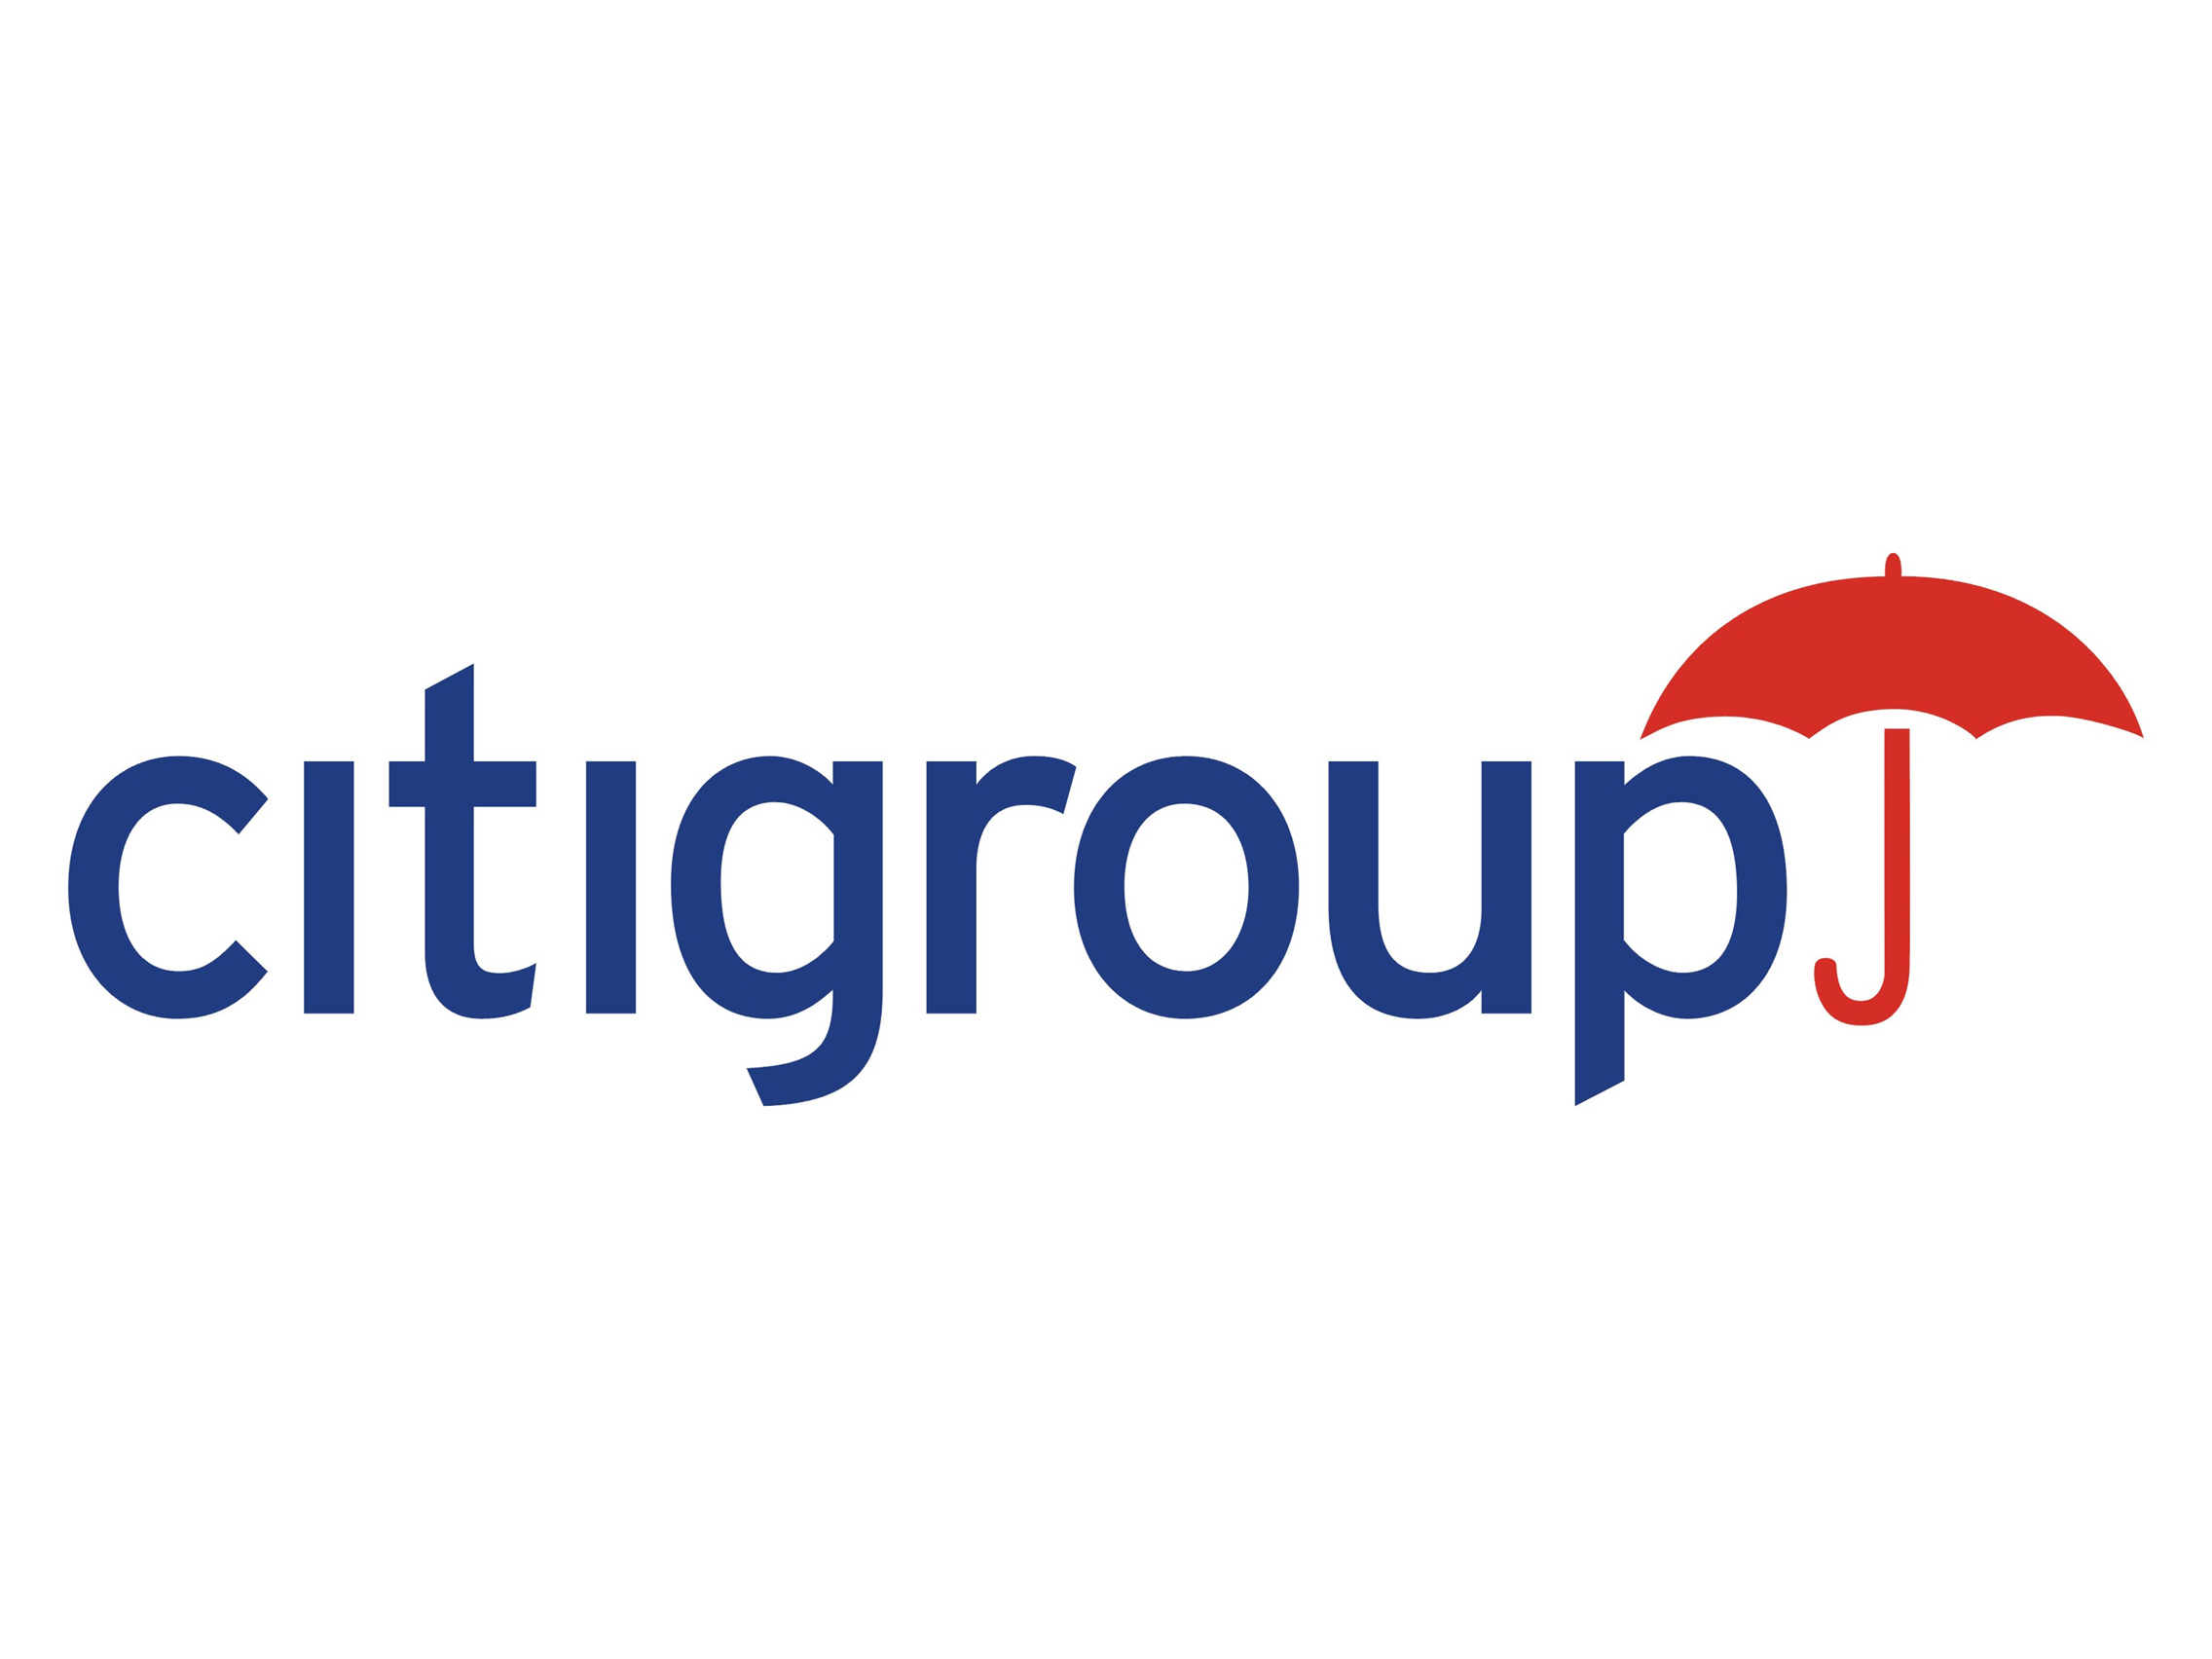 corigroup Logo photo - 1